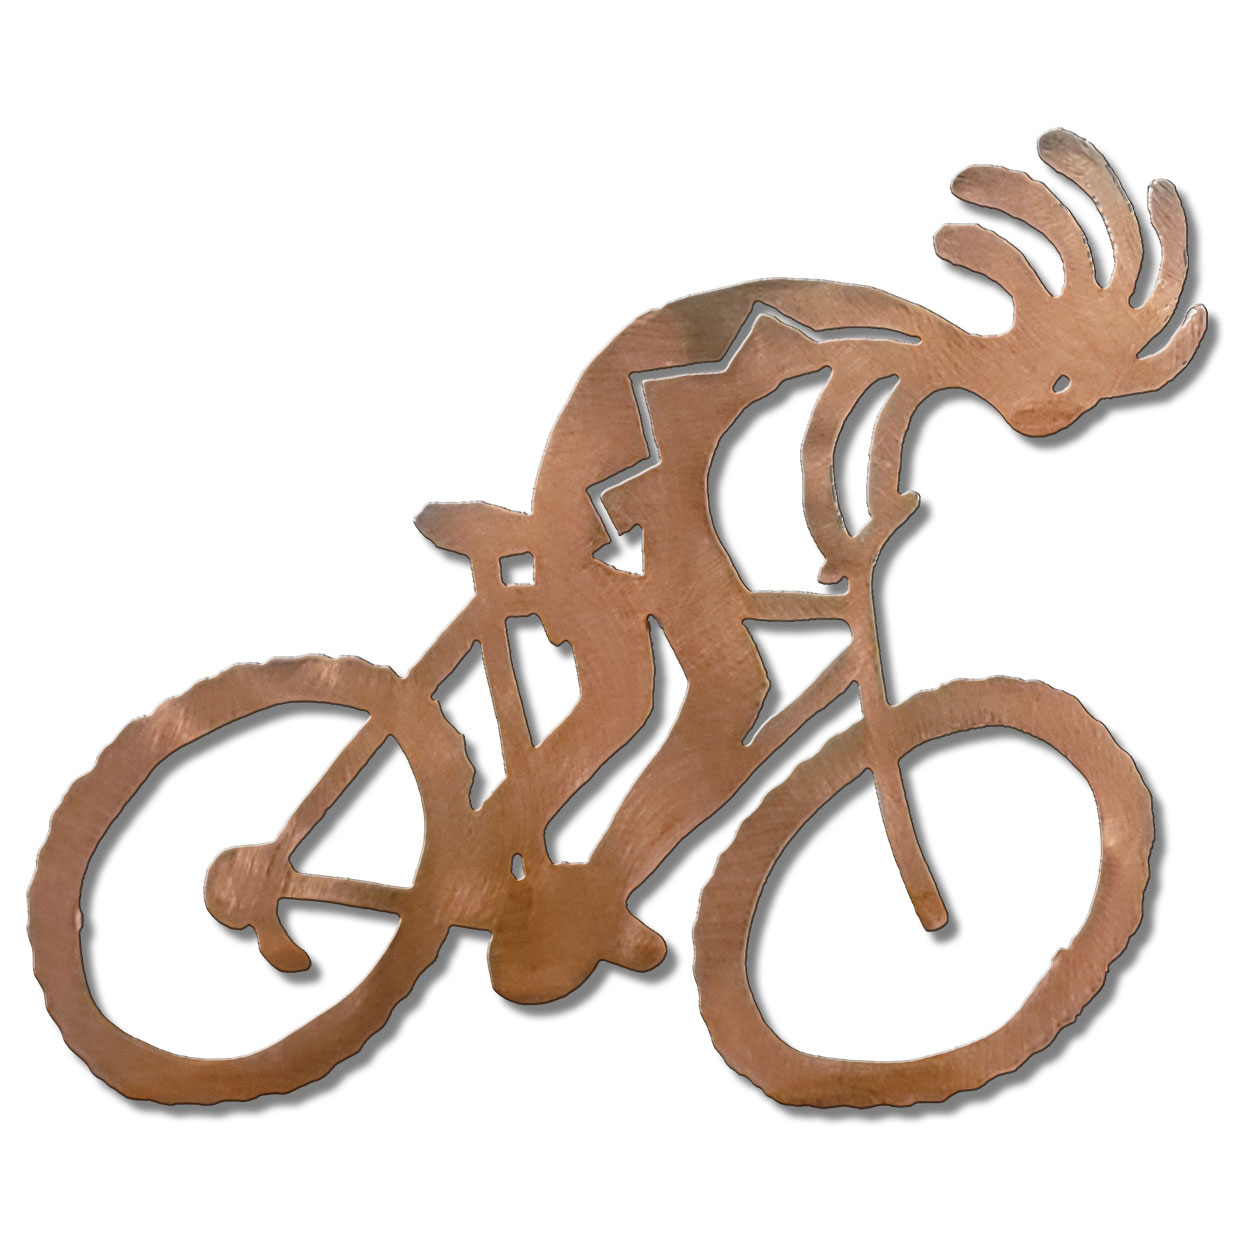 165602 - 18in Mountain Biker Metal Wall Art in Rust Patina